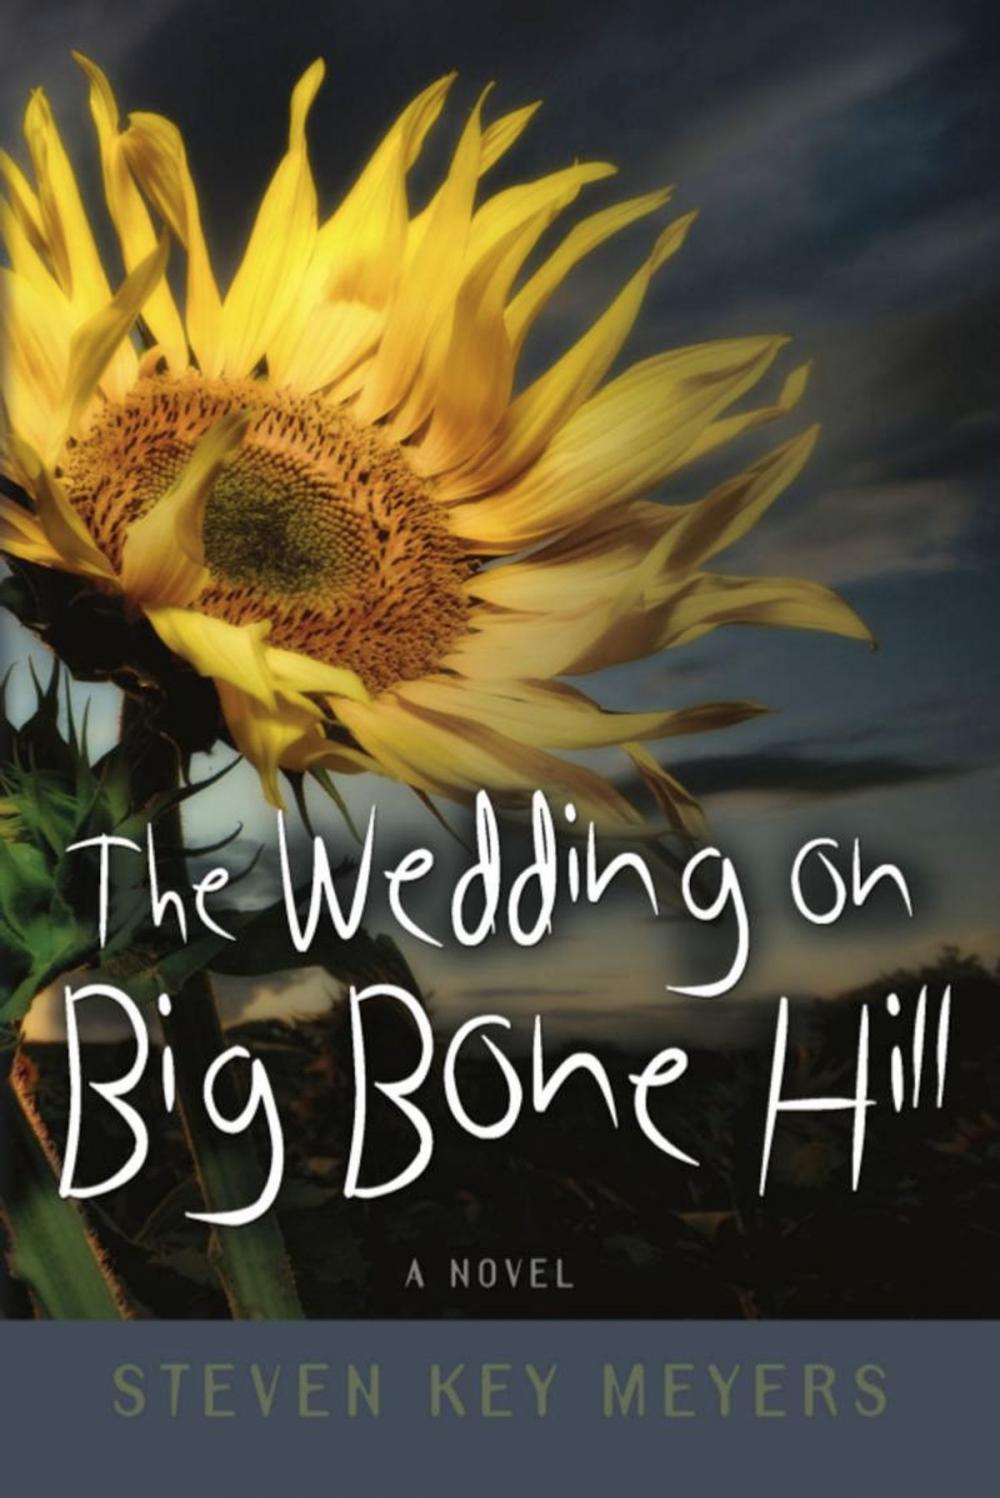 Big bigCover of The Wedding on Big Bone Hill